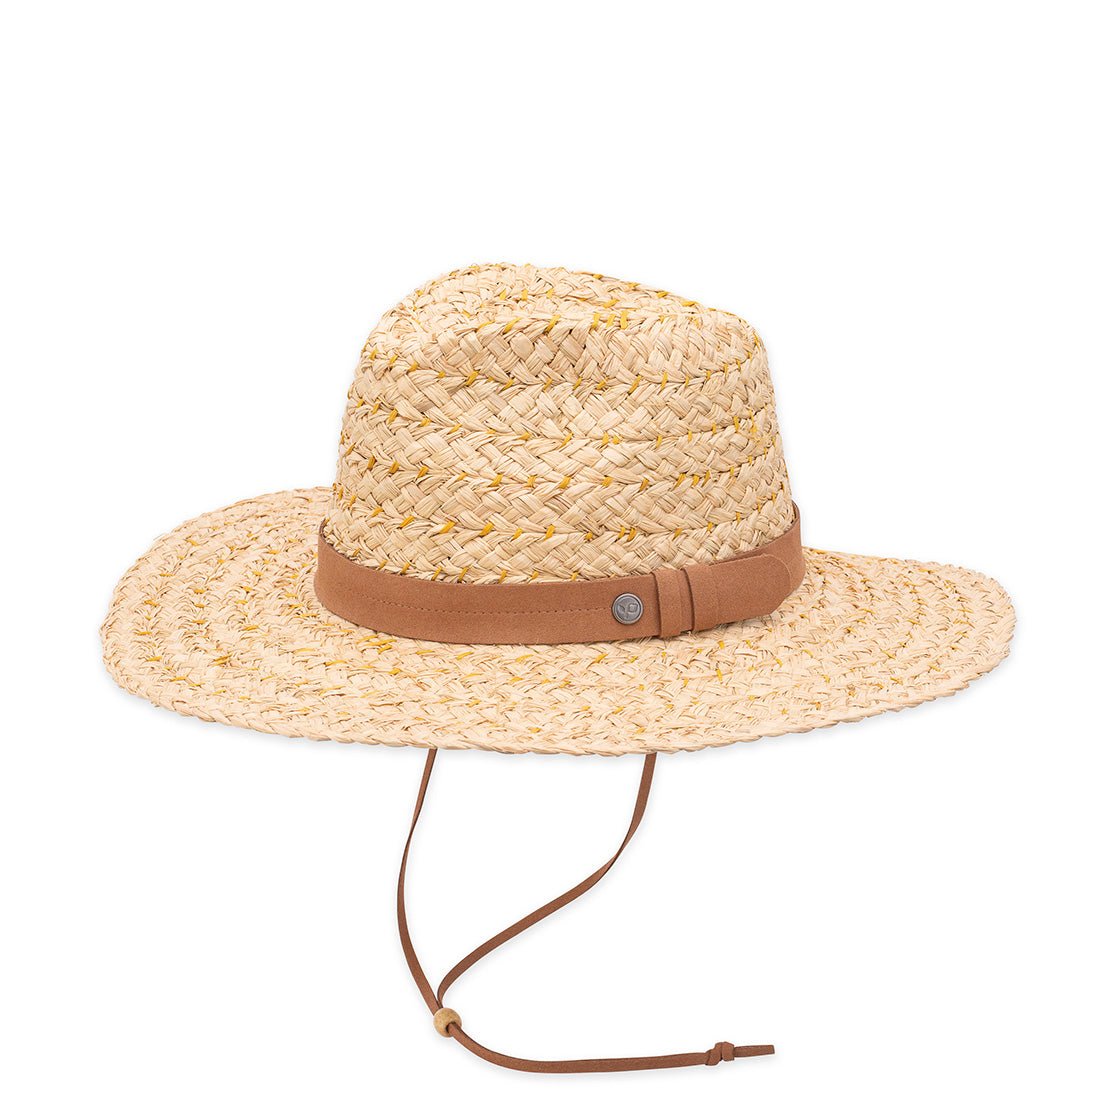 Skiff Sun Hat by Pistil Designs